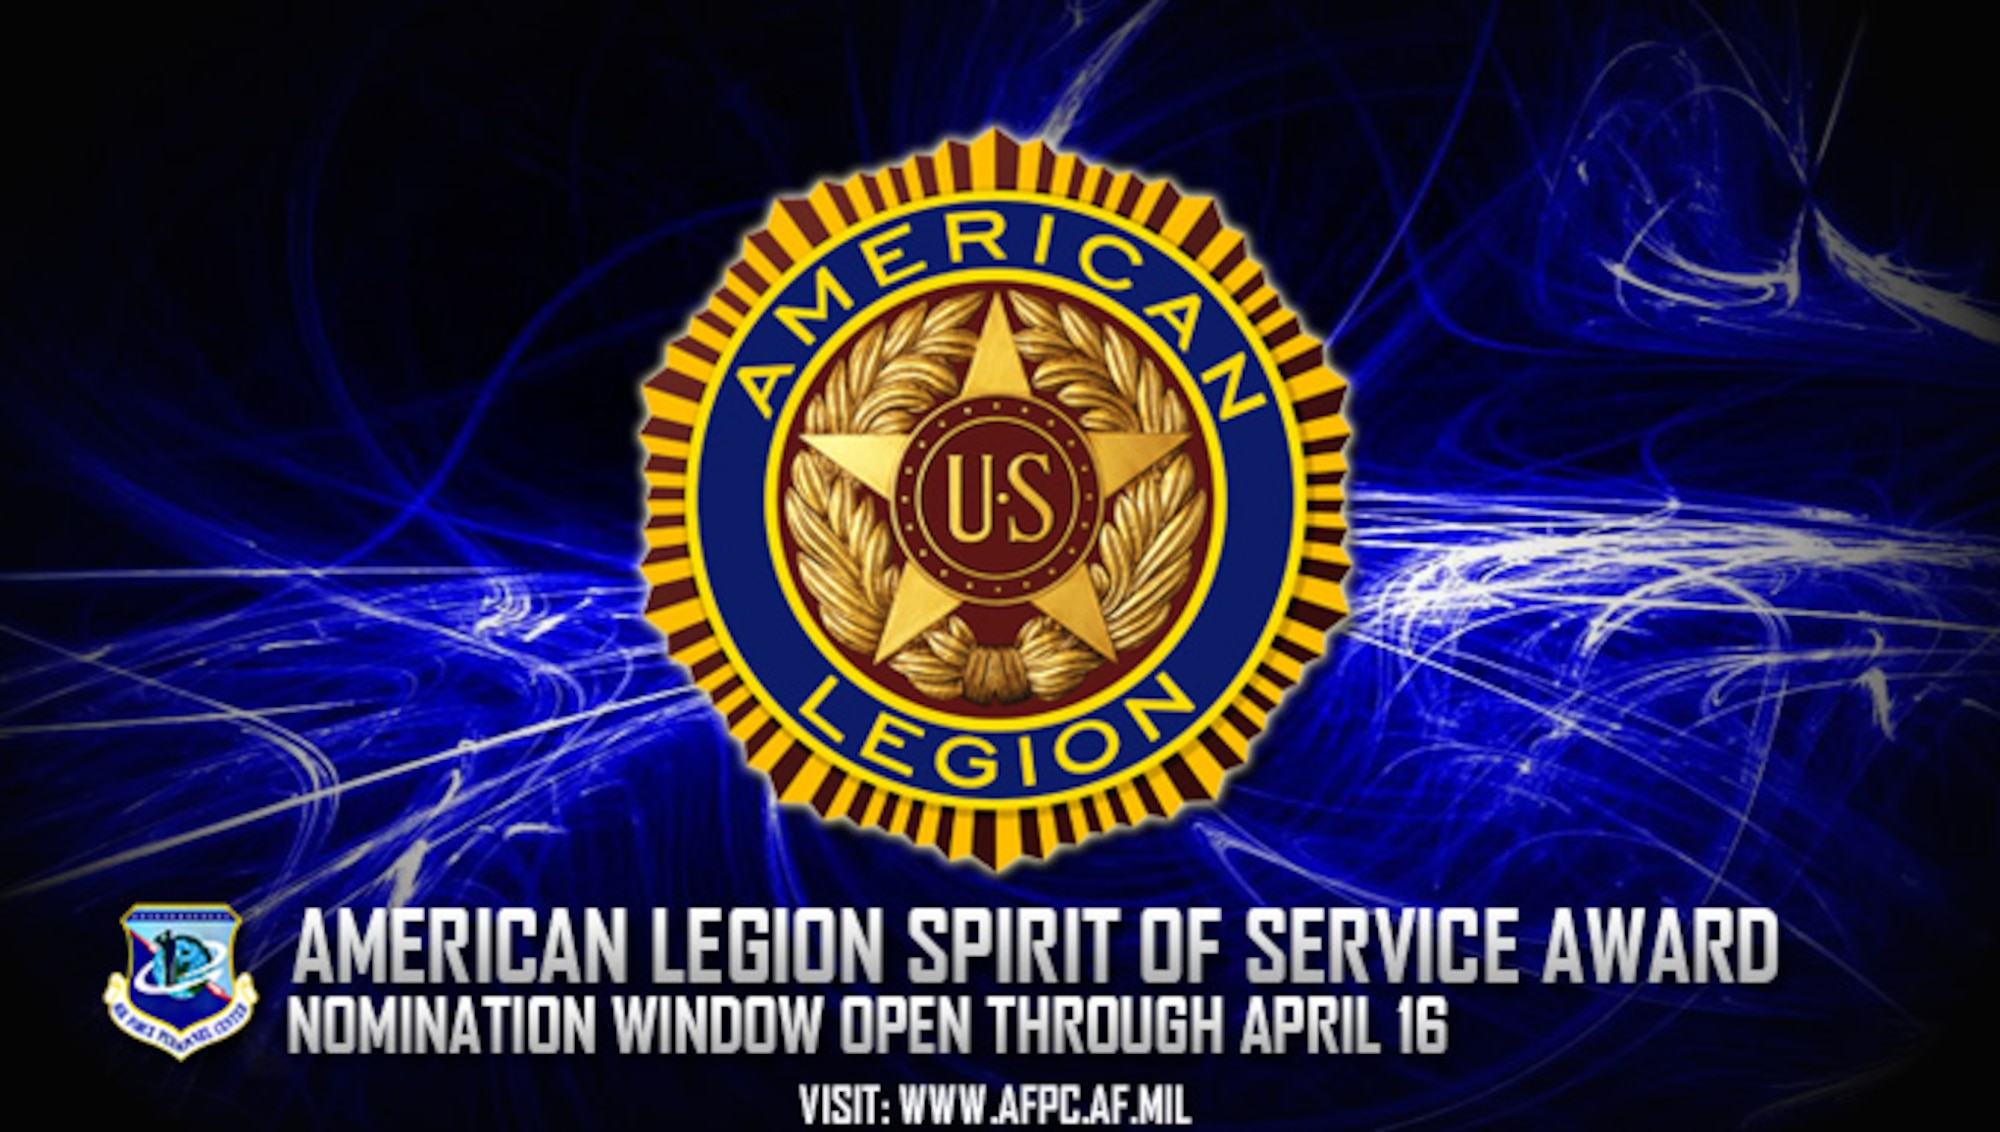 American Legion Spirit of Service Award; nomination window open through April 16